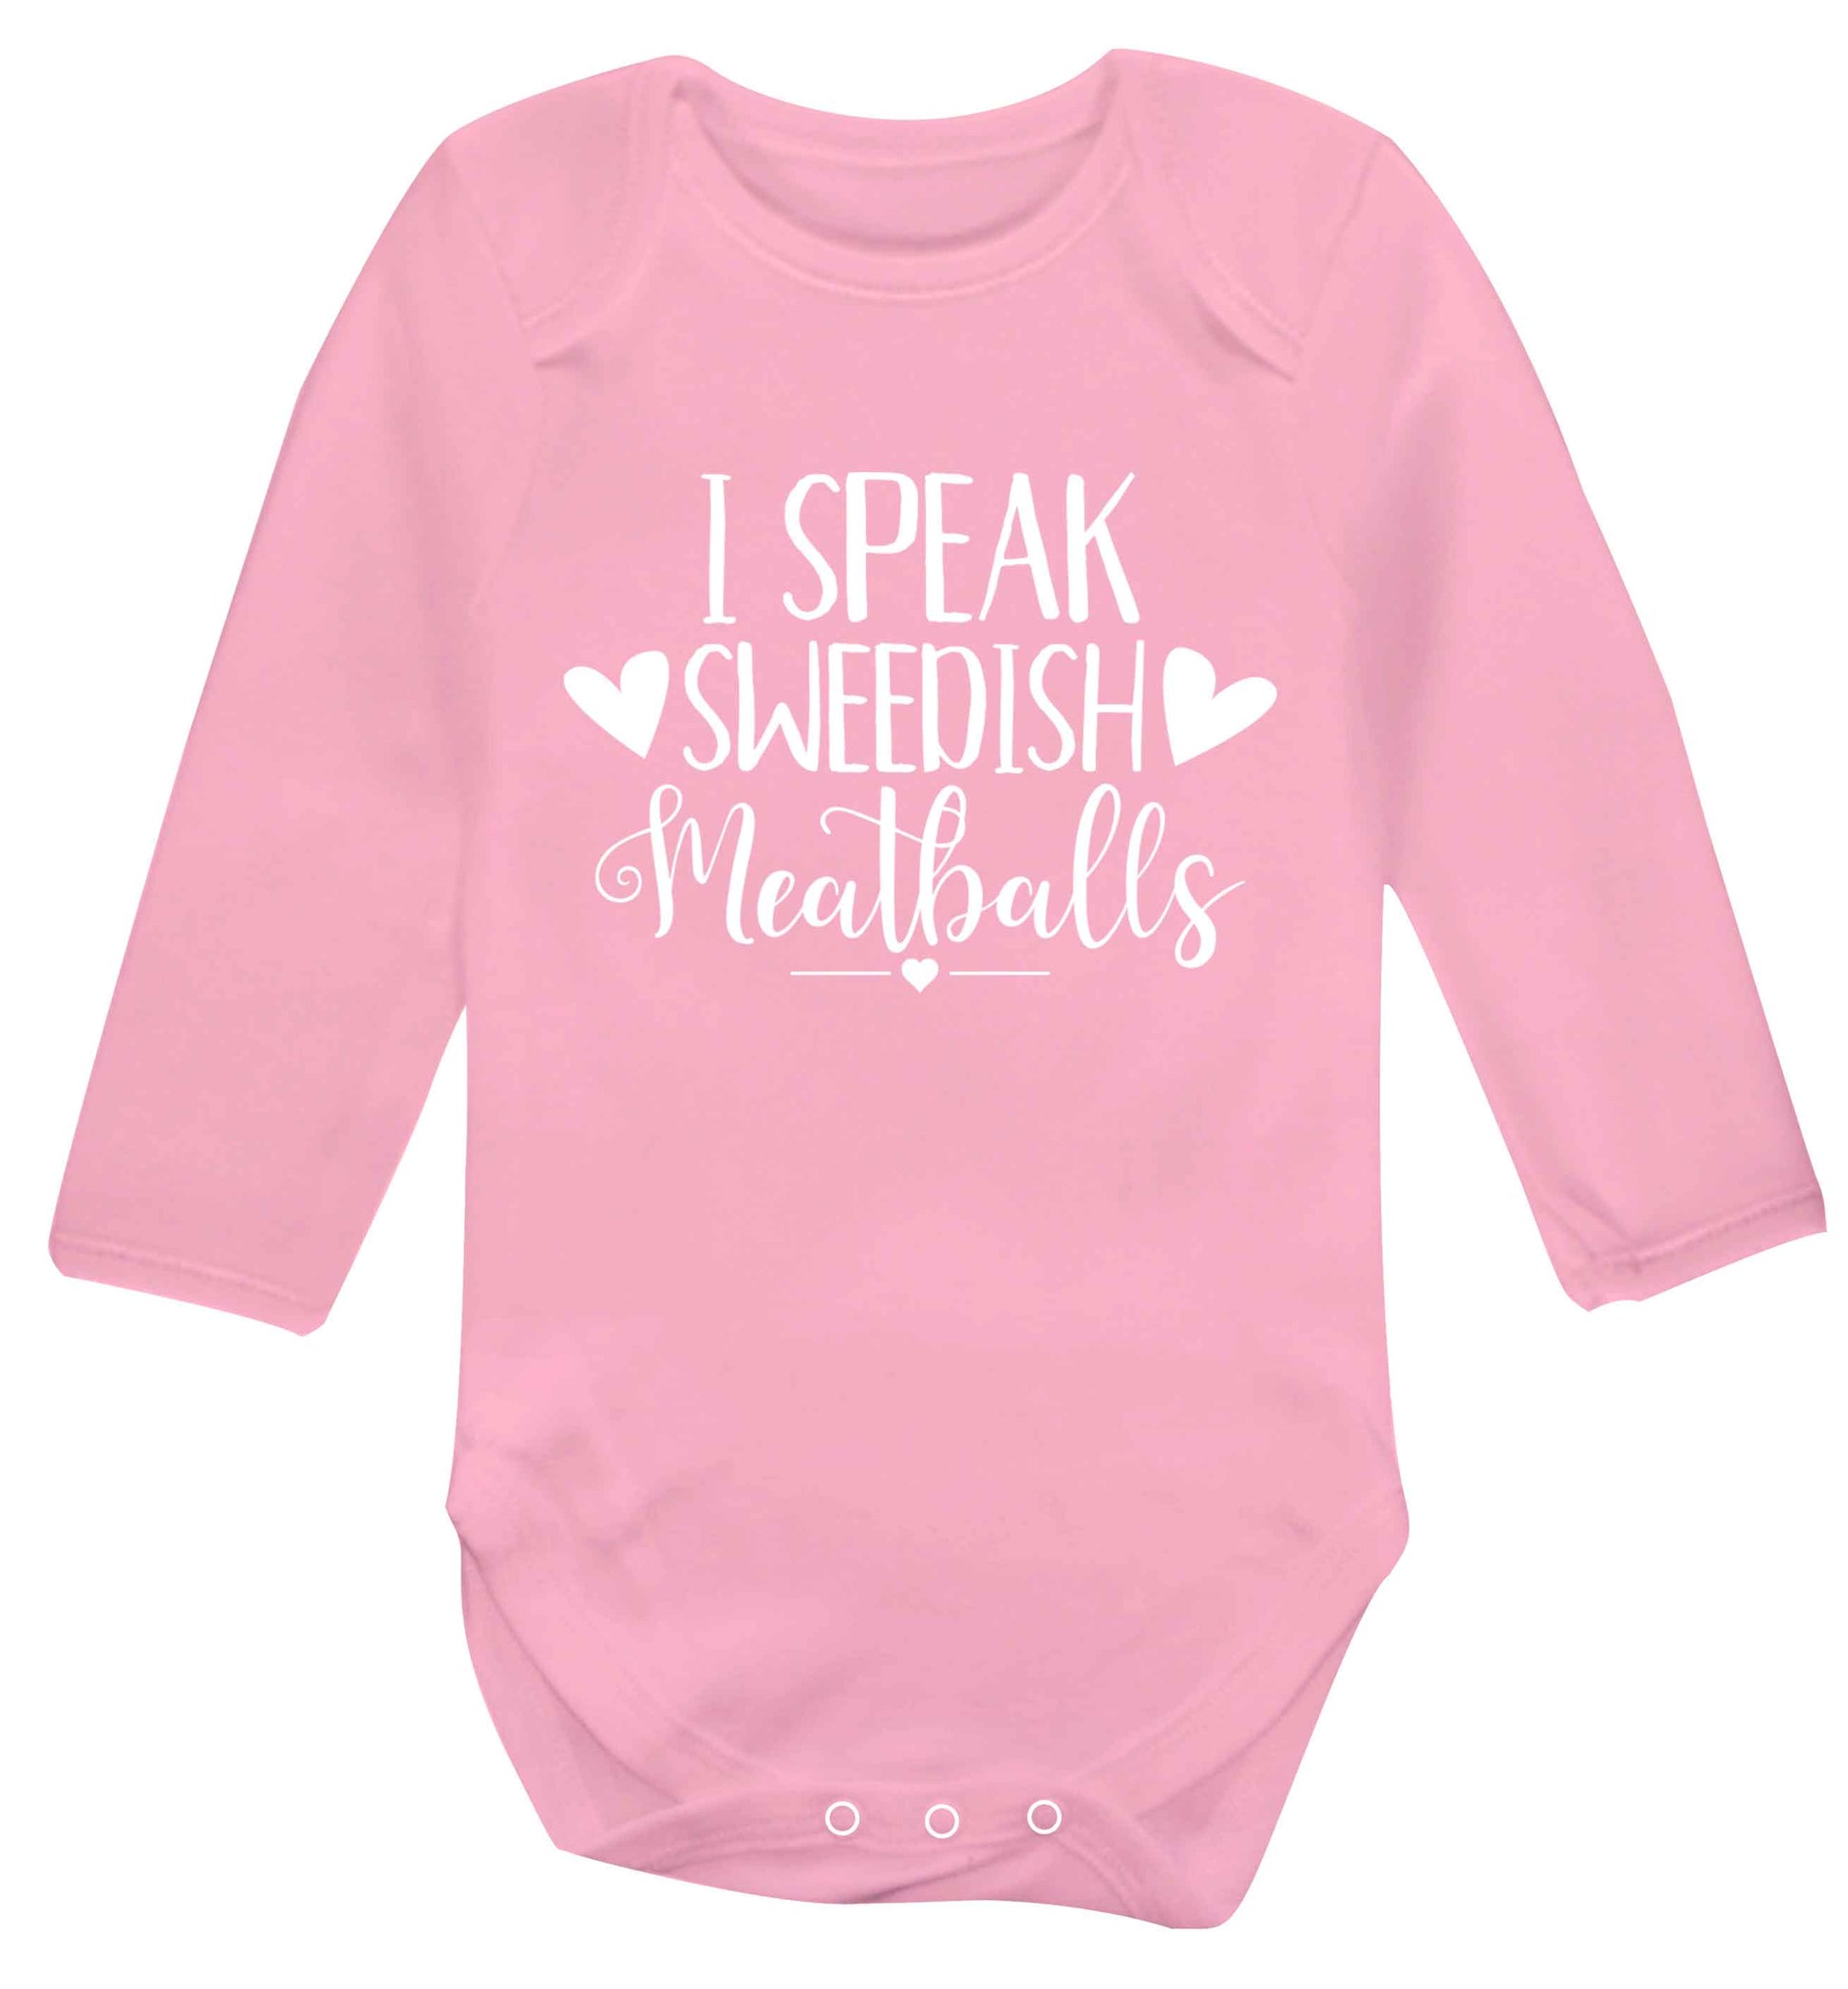 I speak sweedish...meatballs Baby Vest long sleeved pale pink 6-12 months